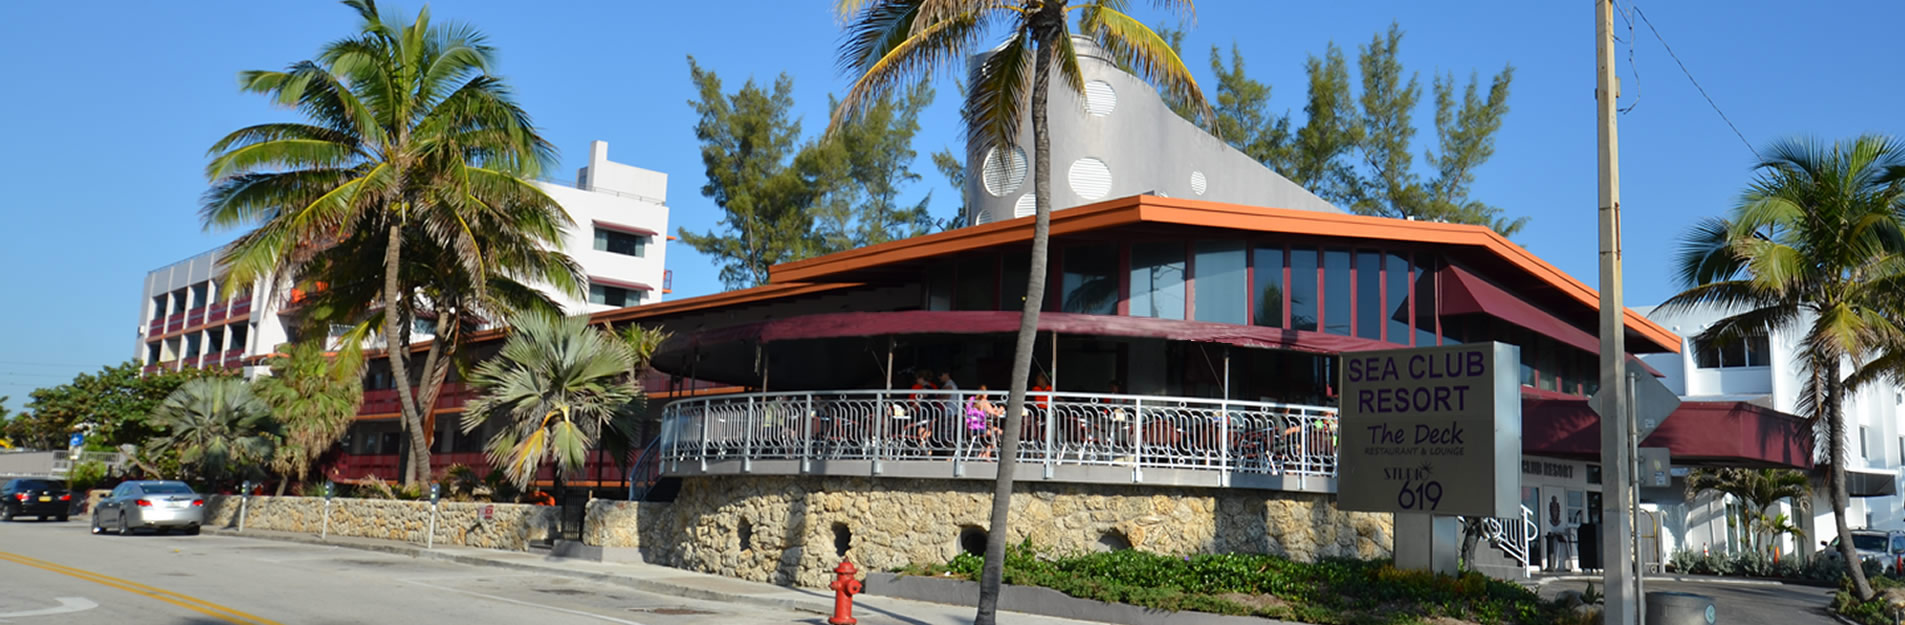 Fort Lauderdale Beachfront Boutique Hotel: Sea Club Resort Florida